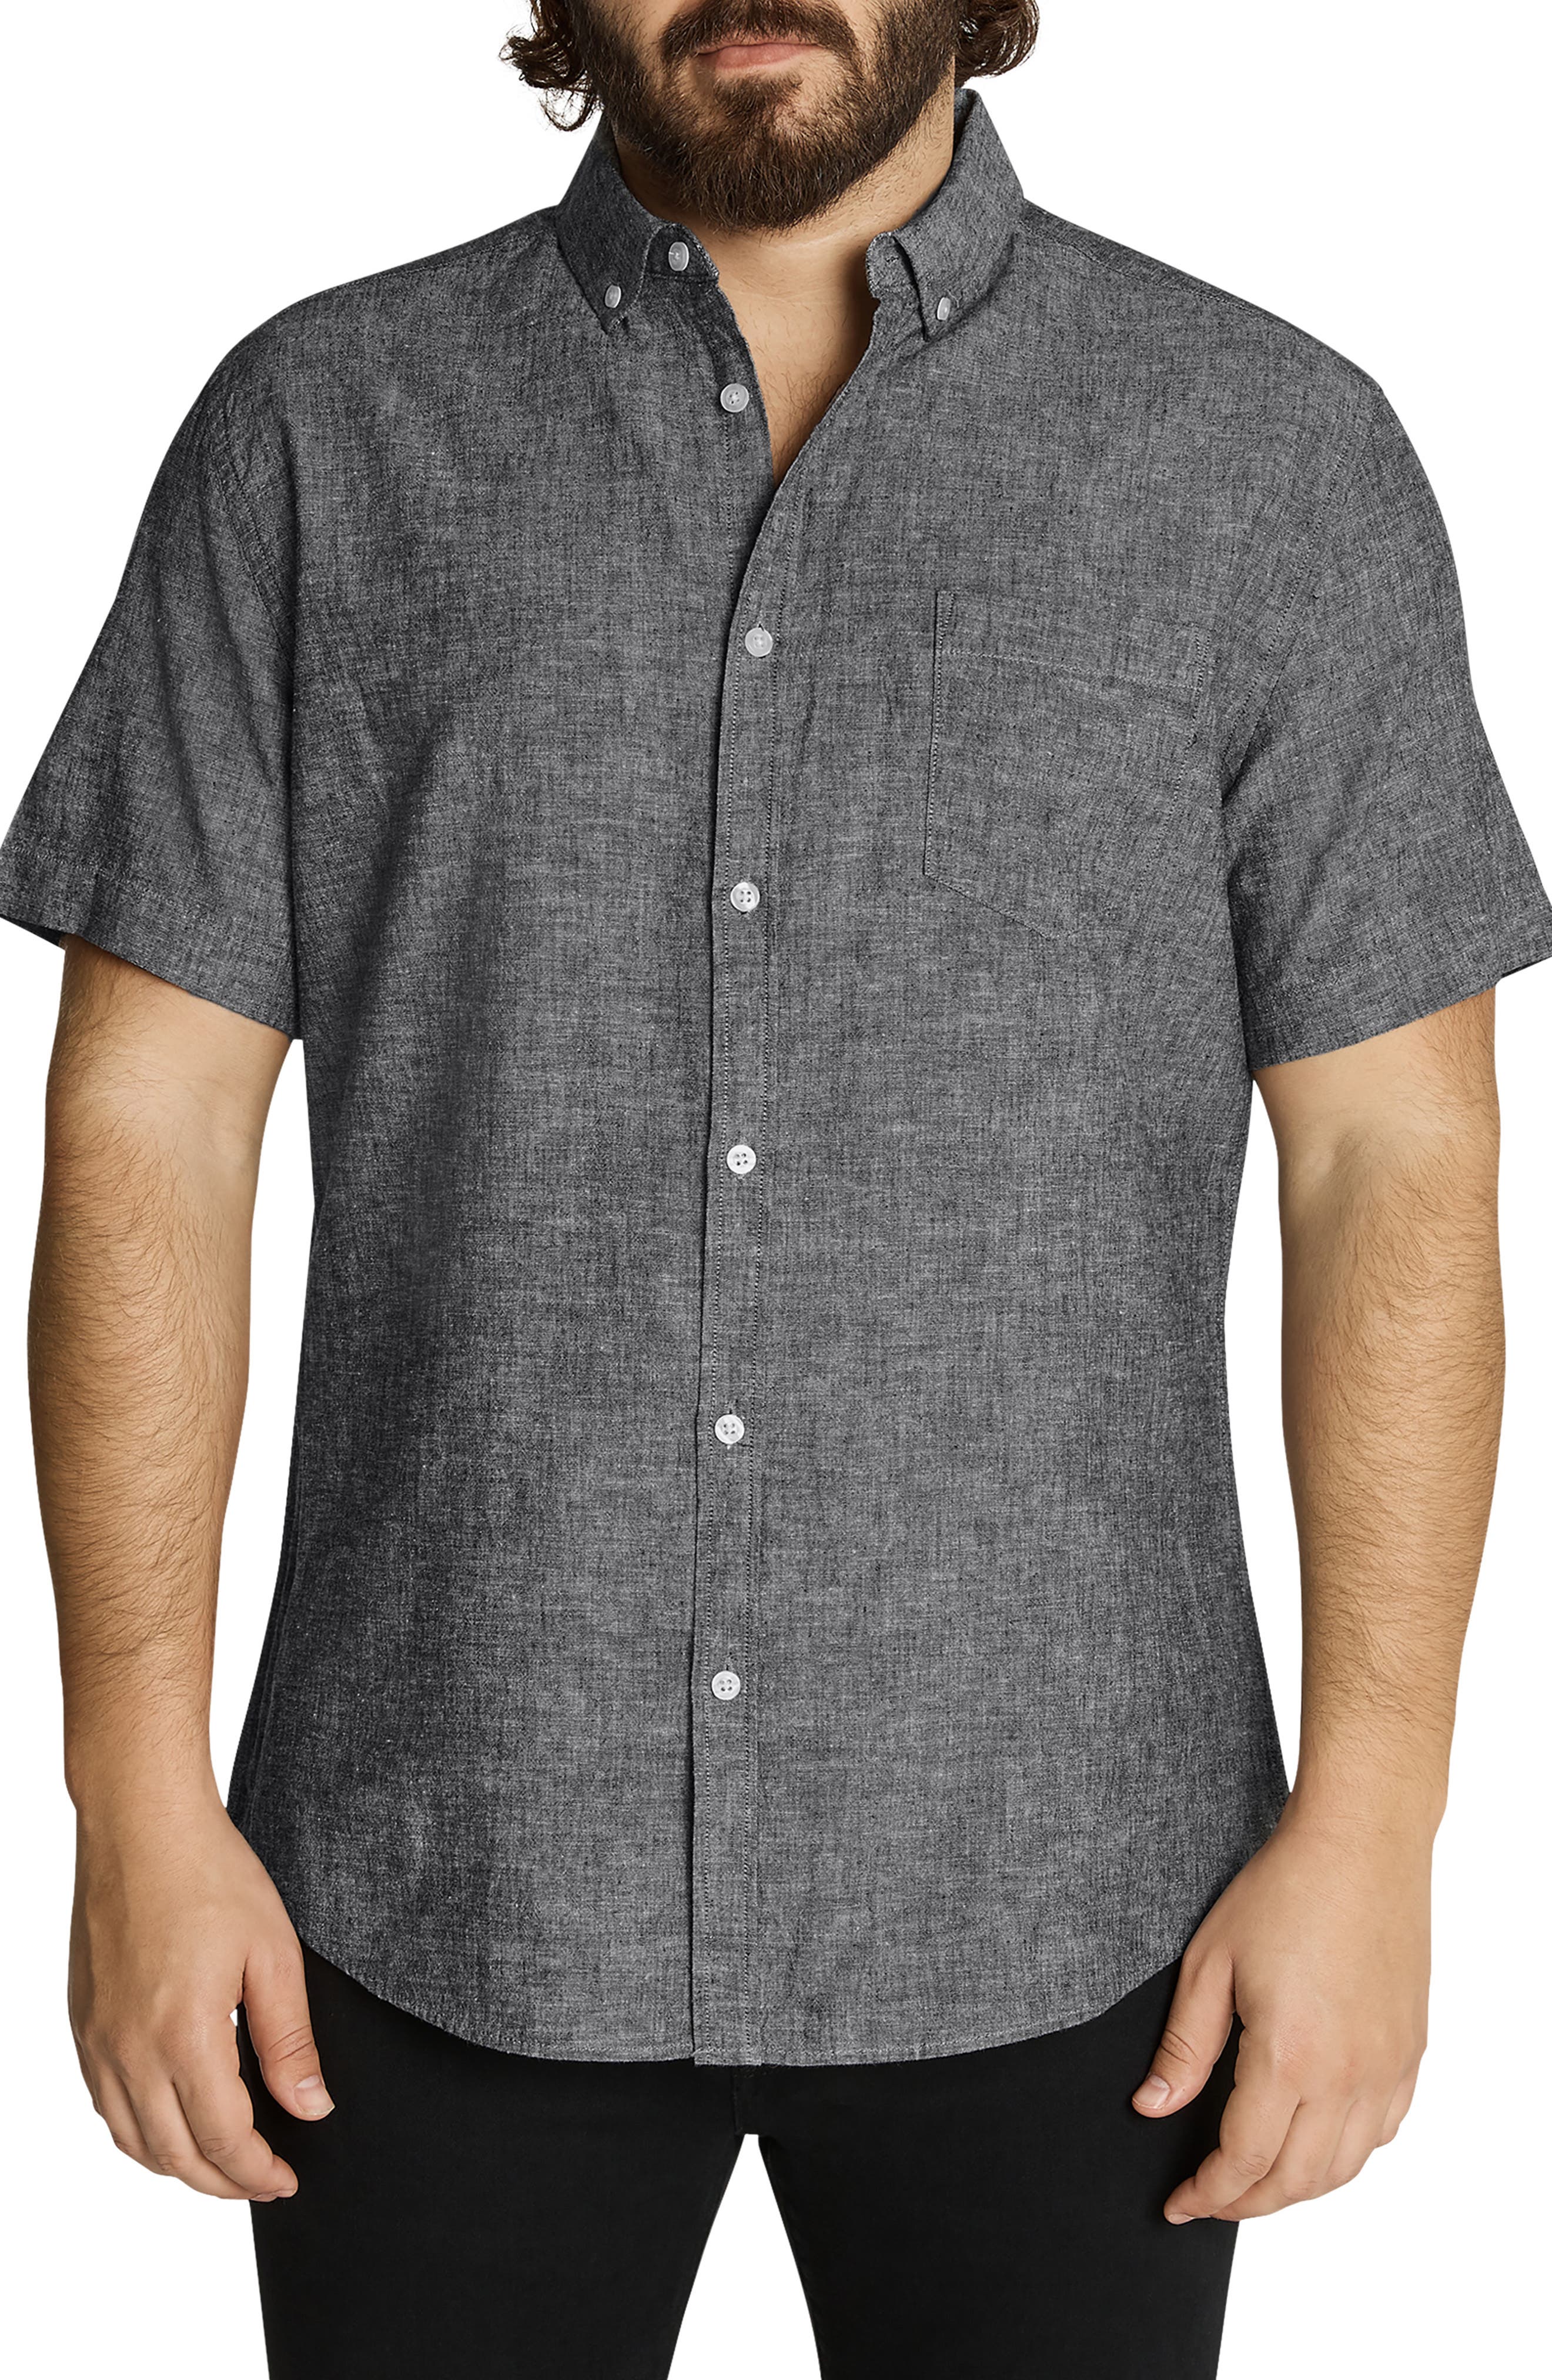 Johnny Bigg Tahiti Short Sleeve Linen Blend Button-Down Shirt in Charcoal